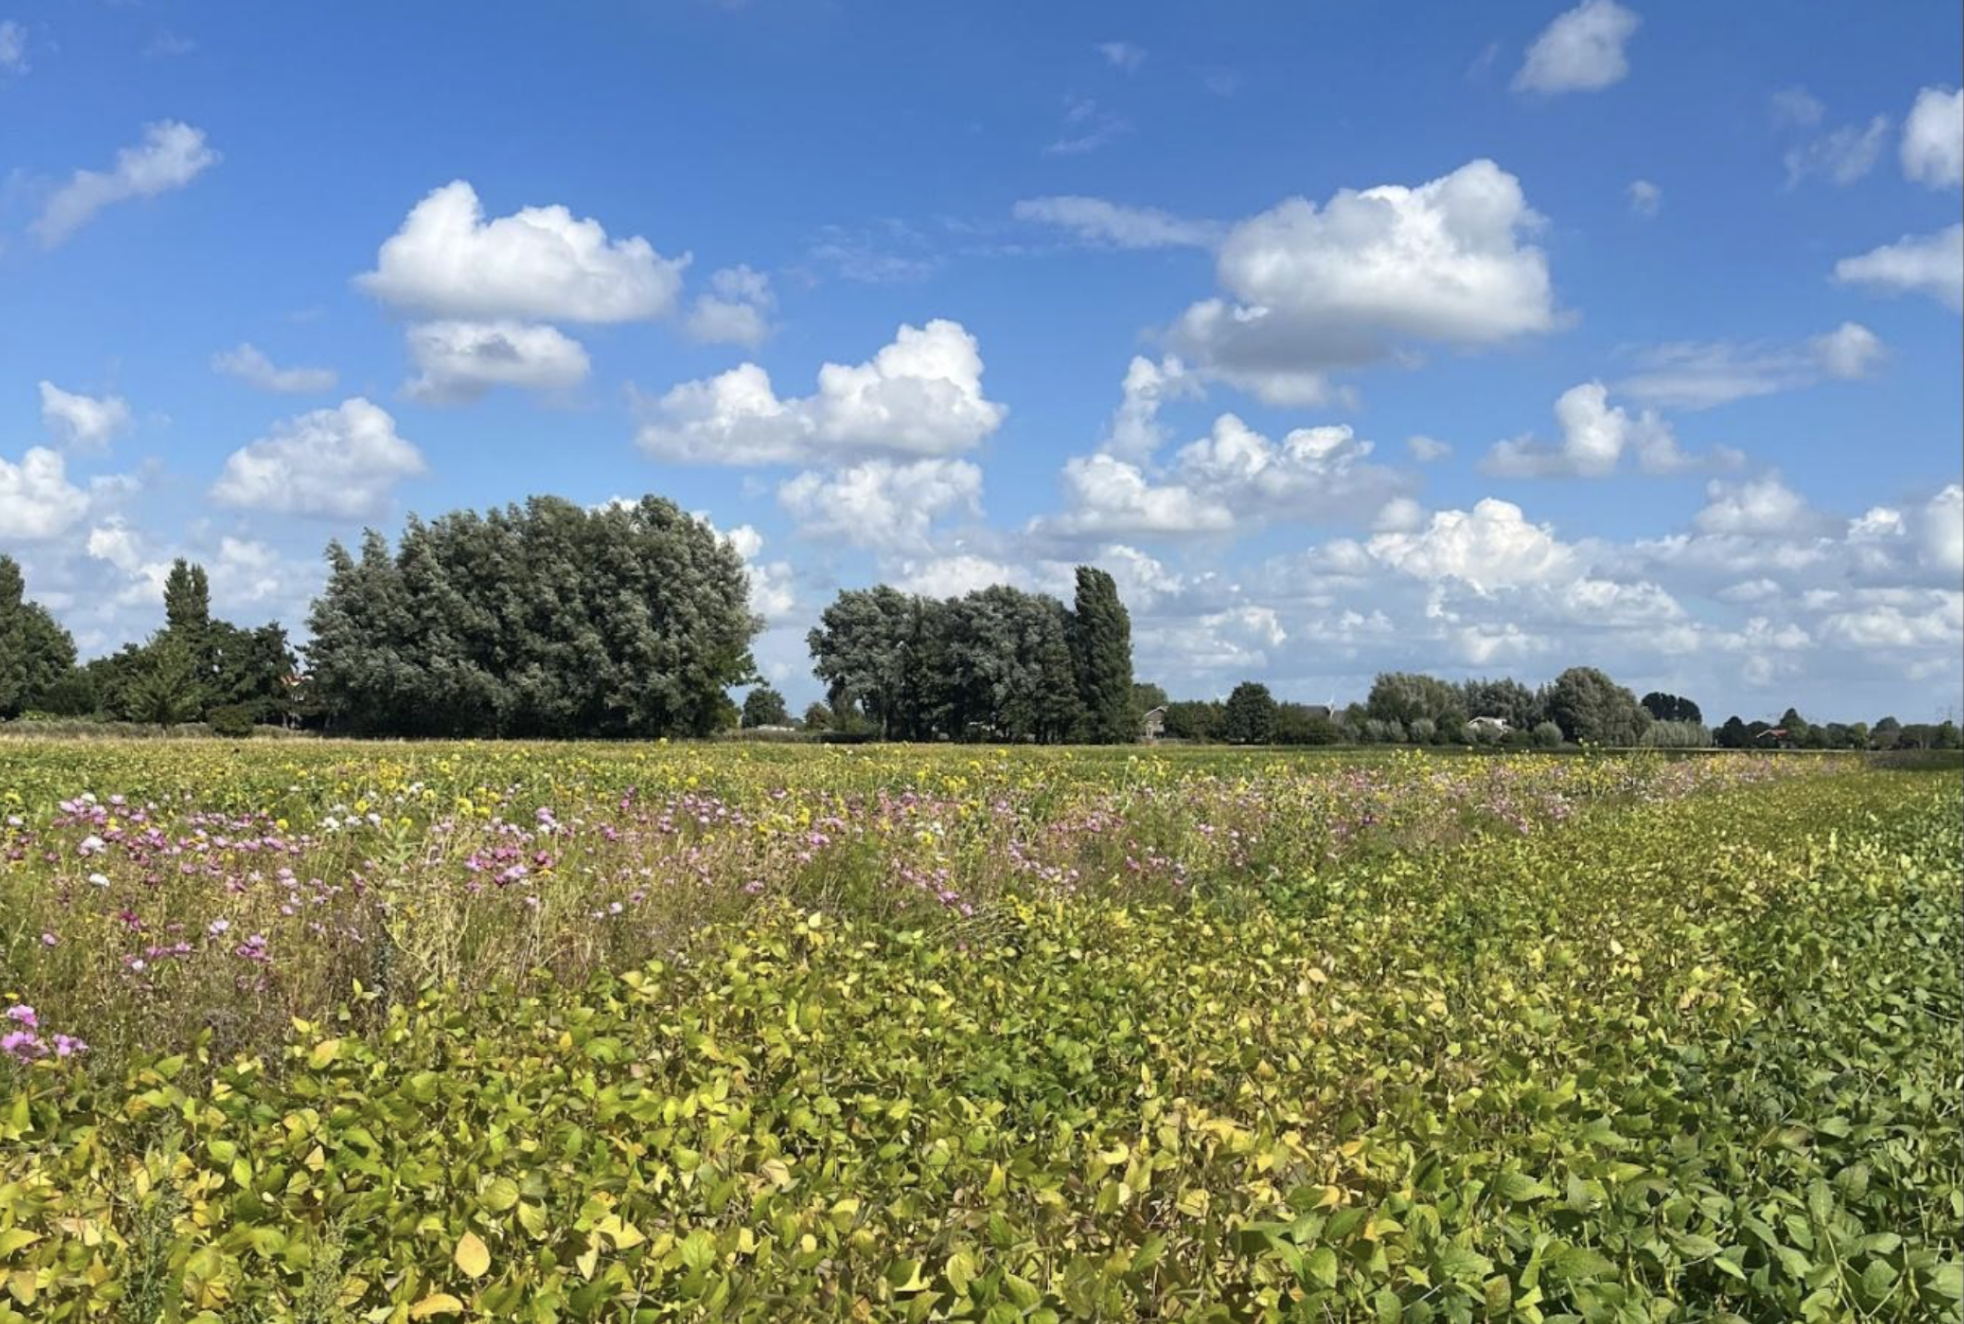 Photo taken in Klompe Landbouw, a regenerative agriculture farm in the Netherlands